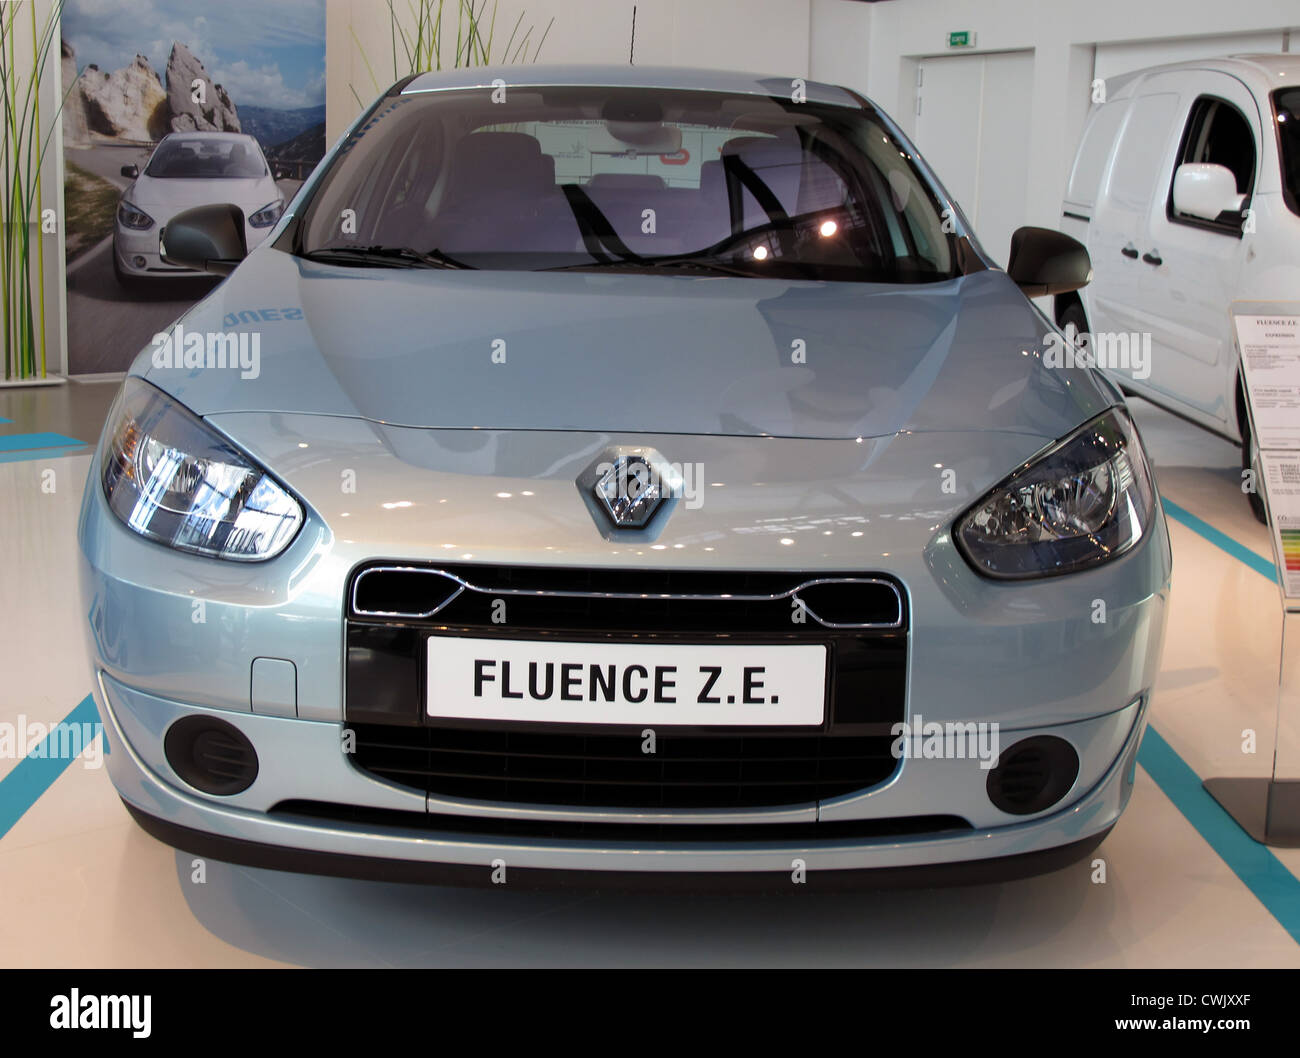 2012 Renault Fluence ZE new video 